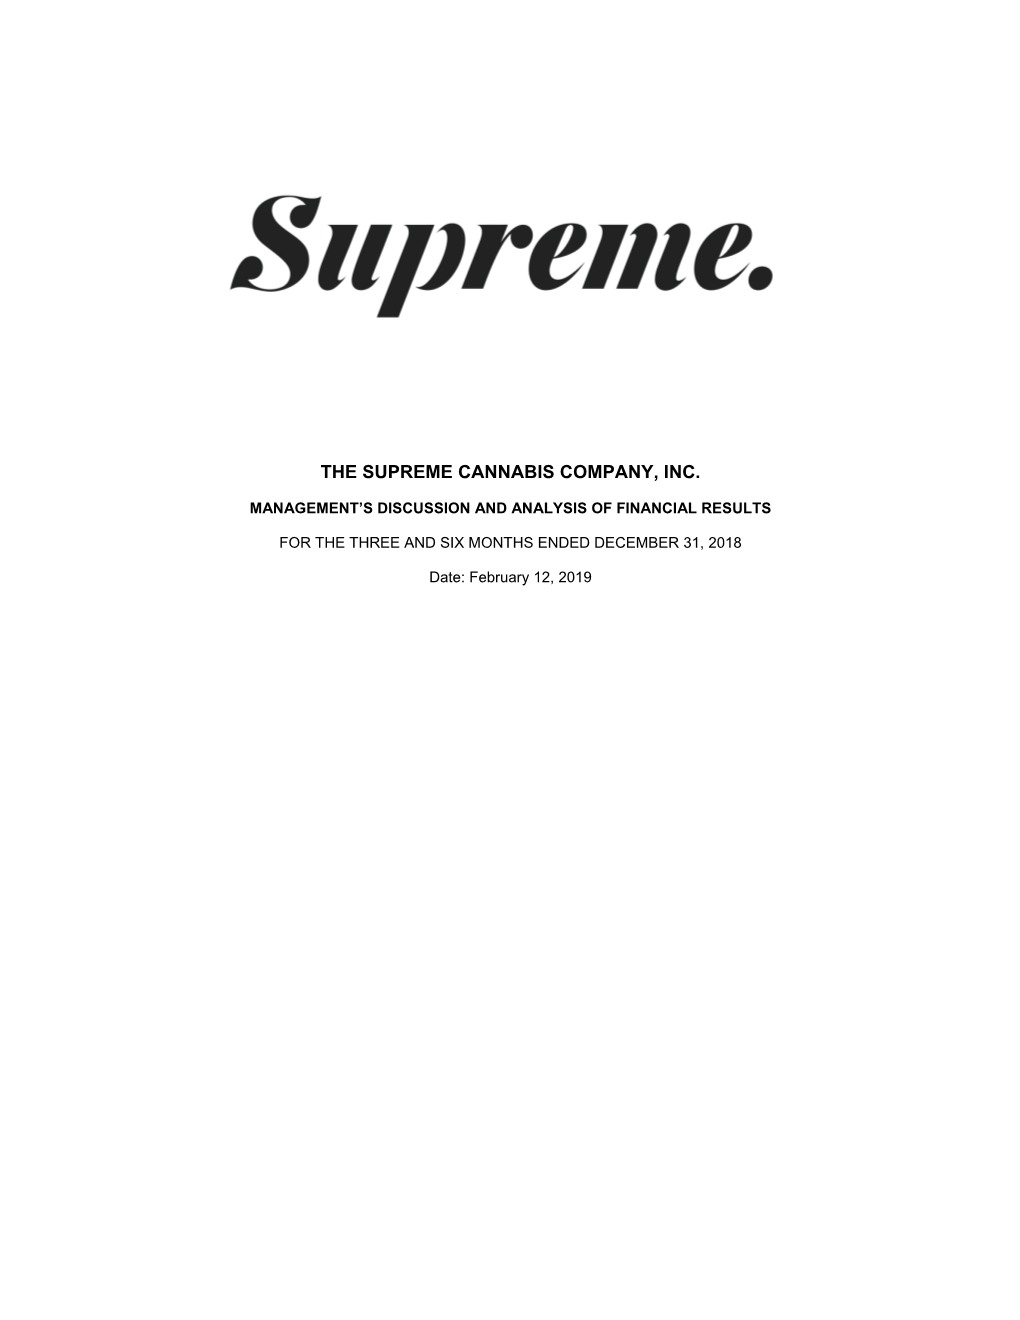 The Supreme Cannabis Company, Inc